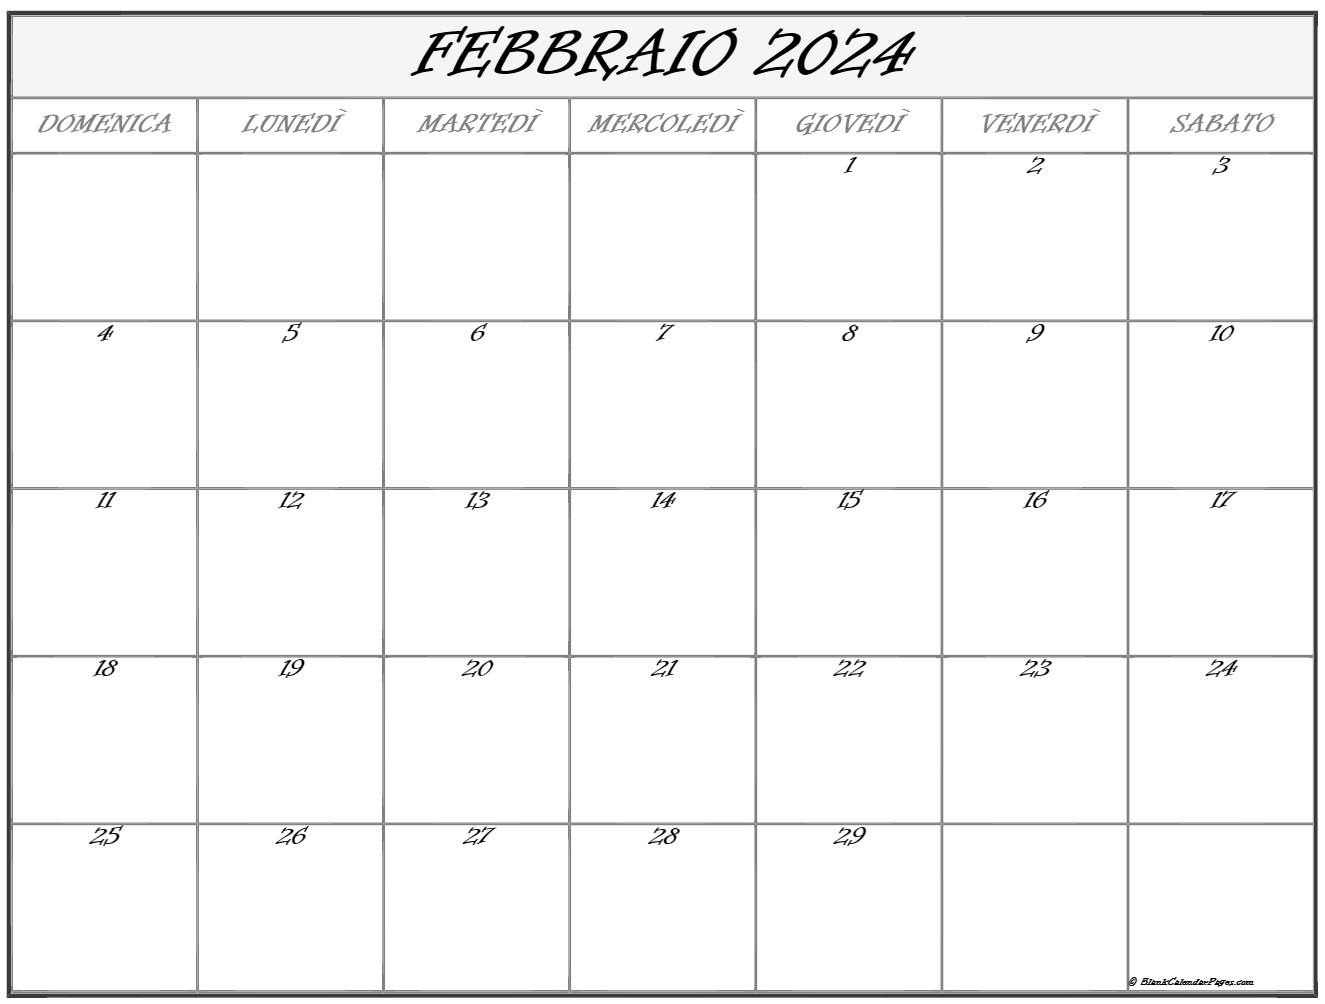 febbraio 2024 calendario gratis italiano Calendario febbraio